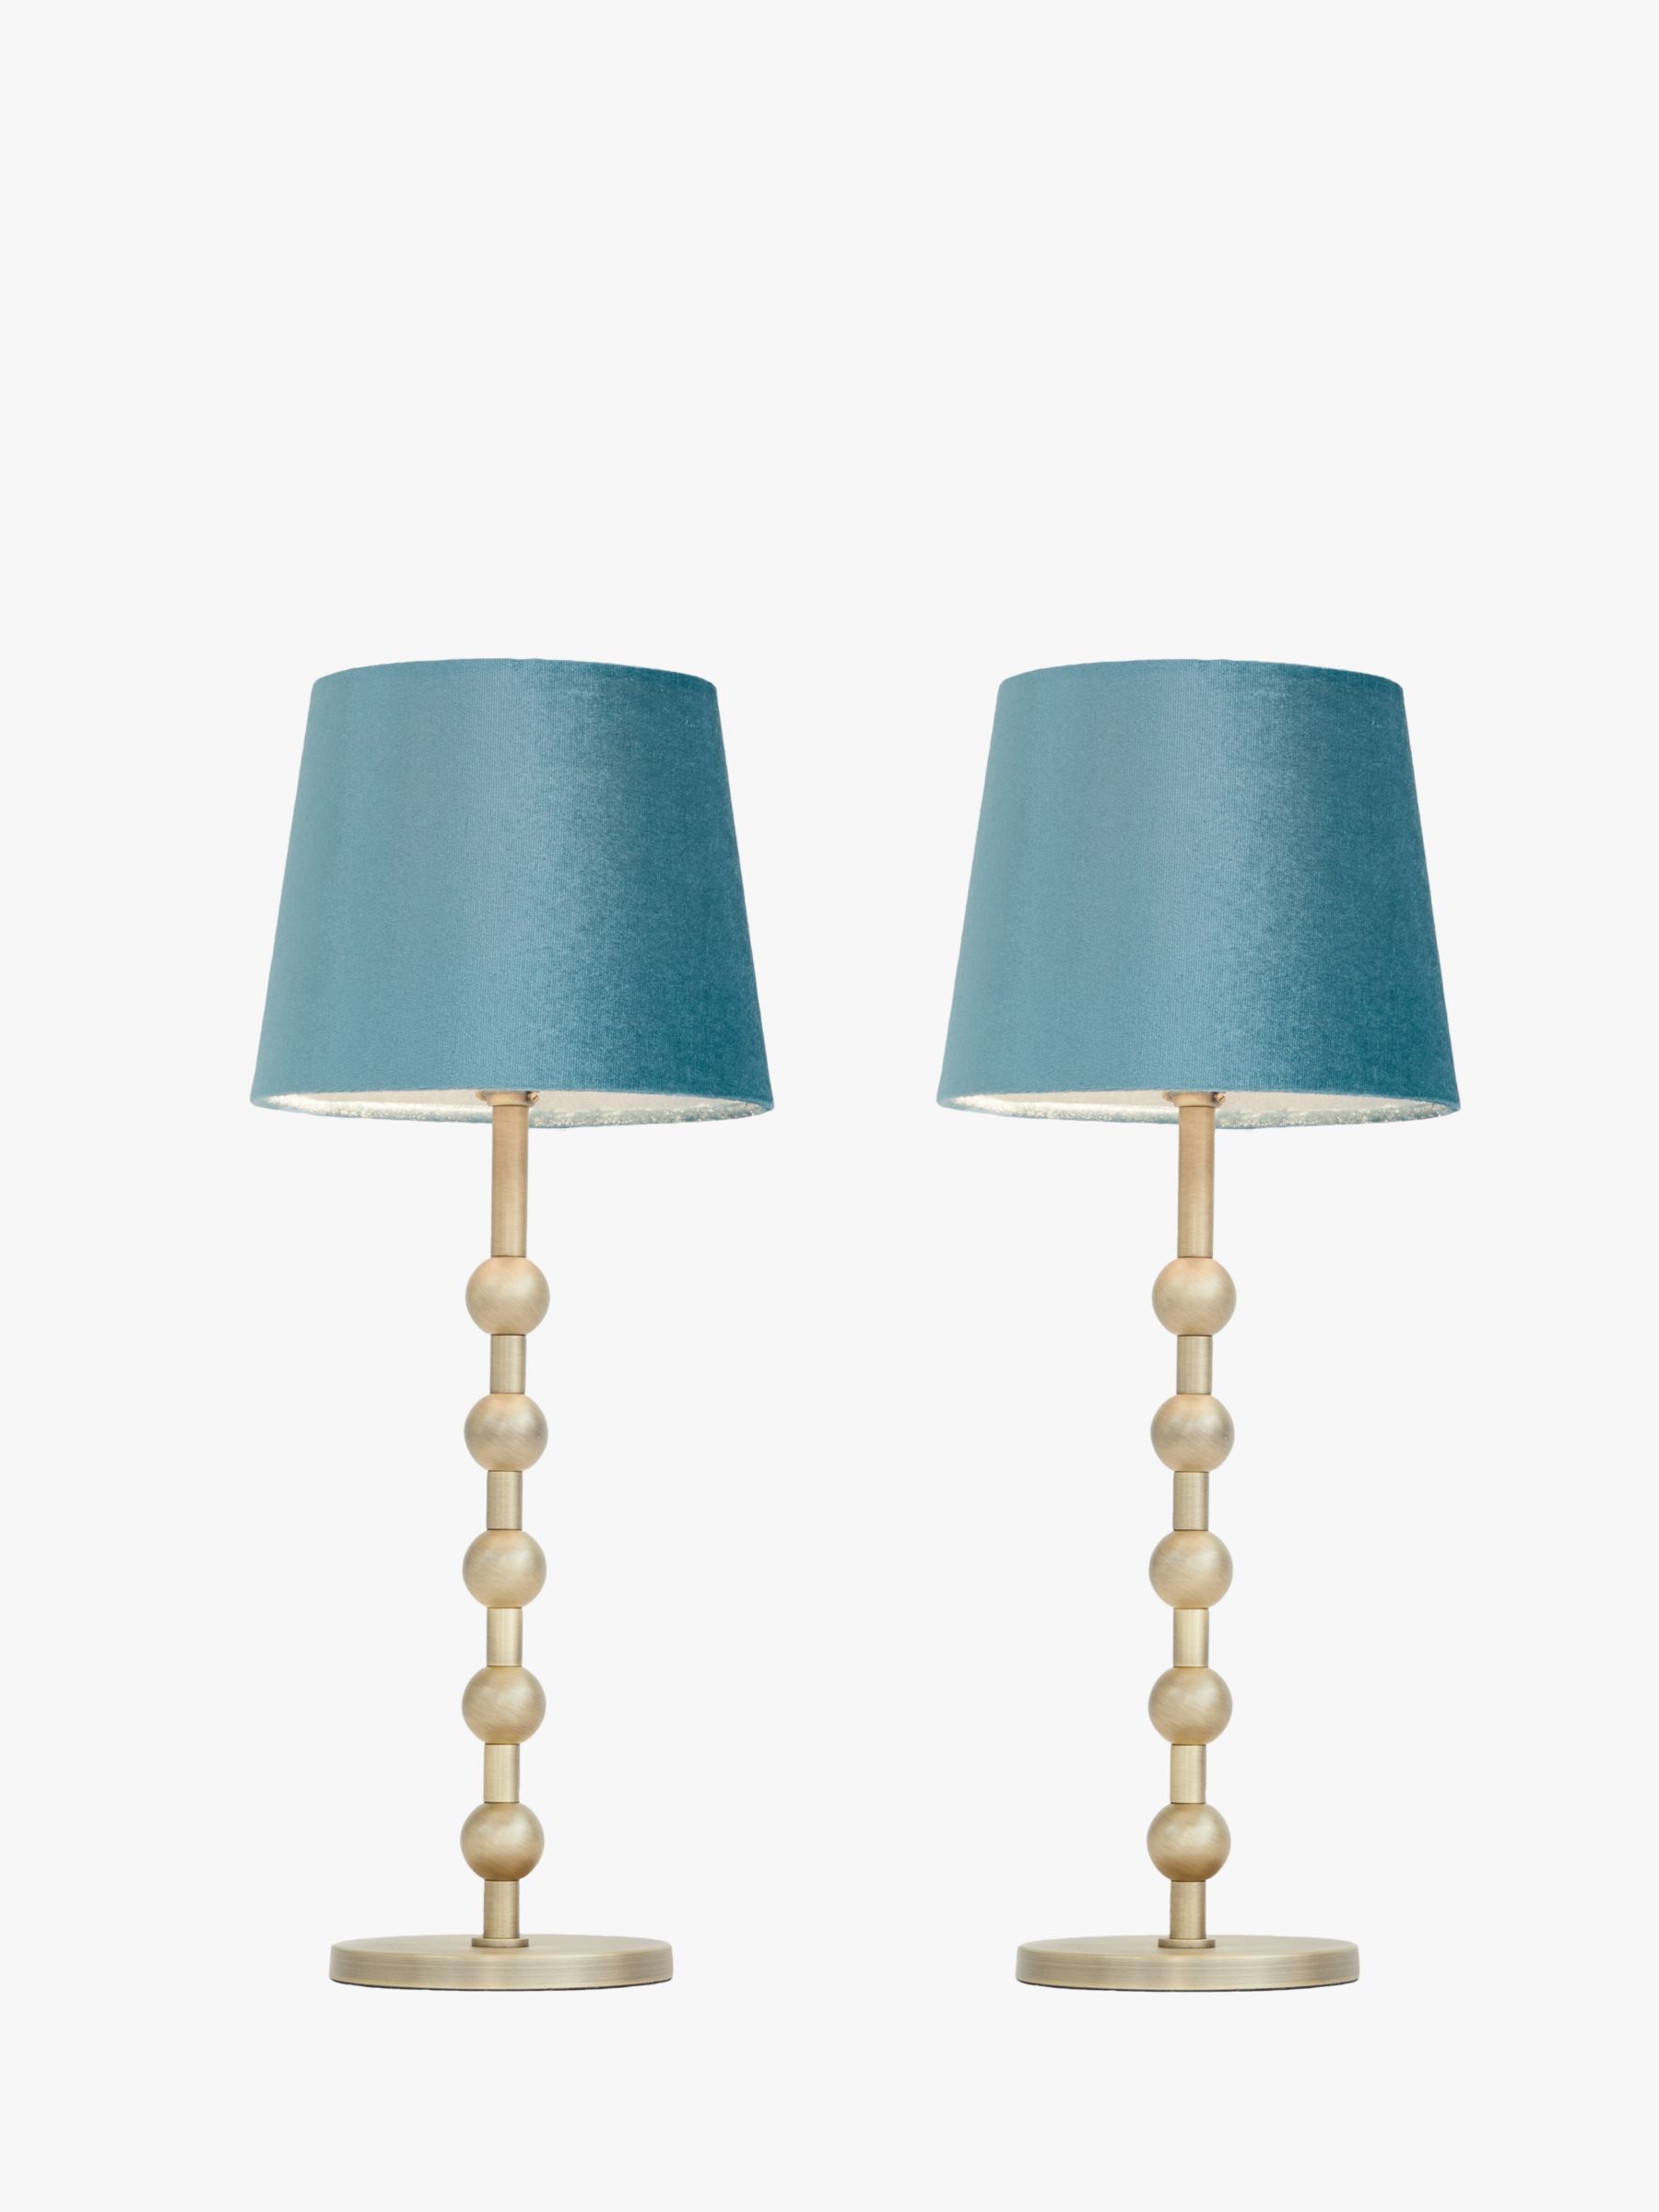 John Lewis & Partners Bobble Table Lamps, Set of 2, Antique Brass